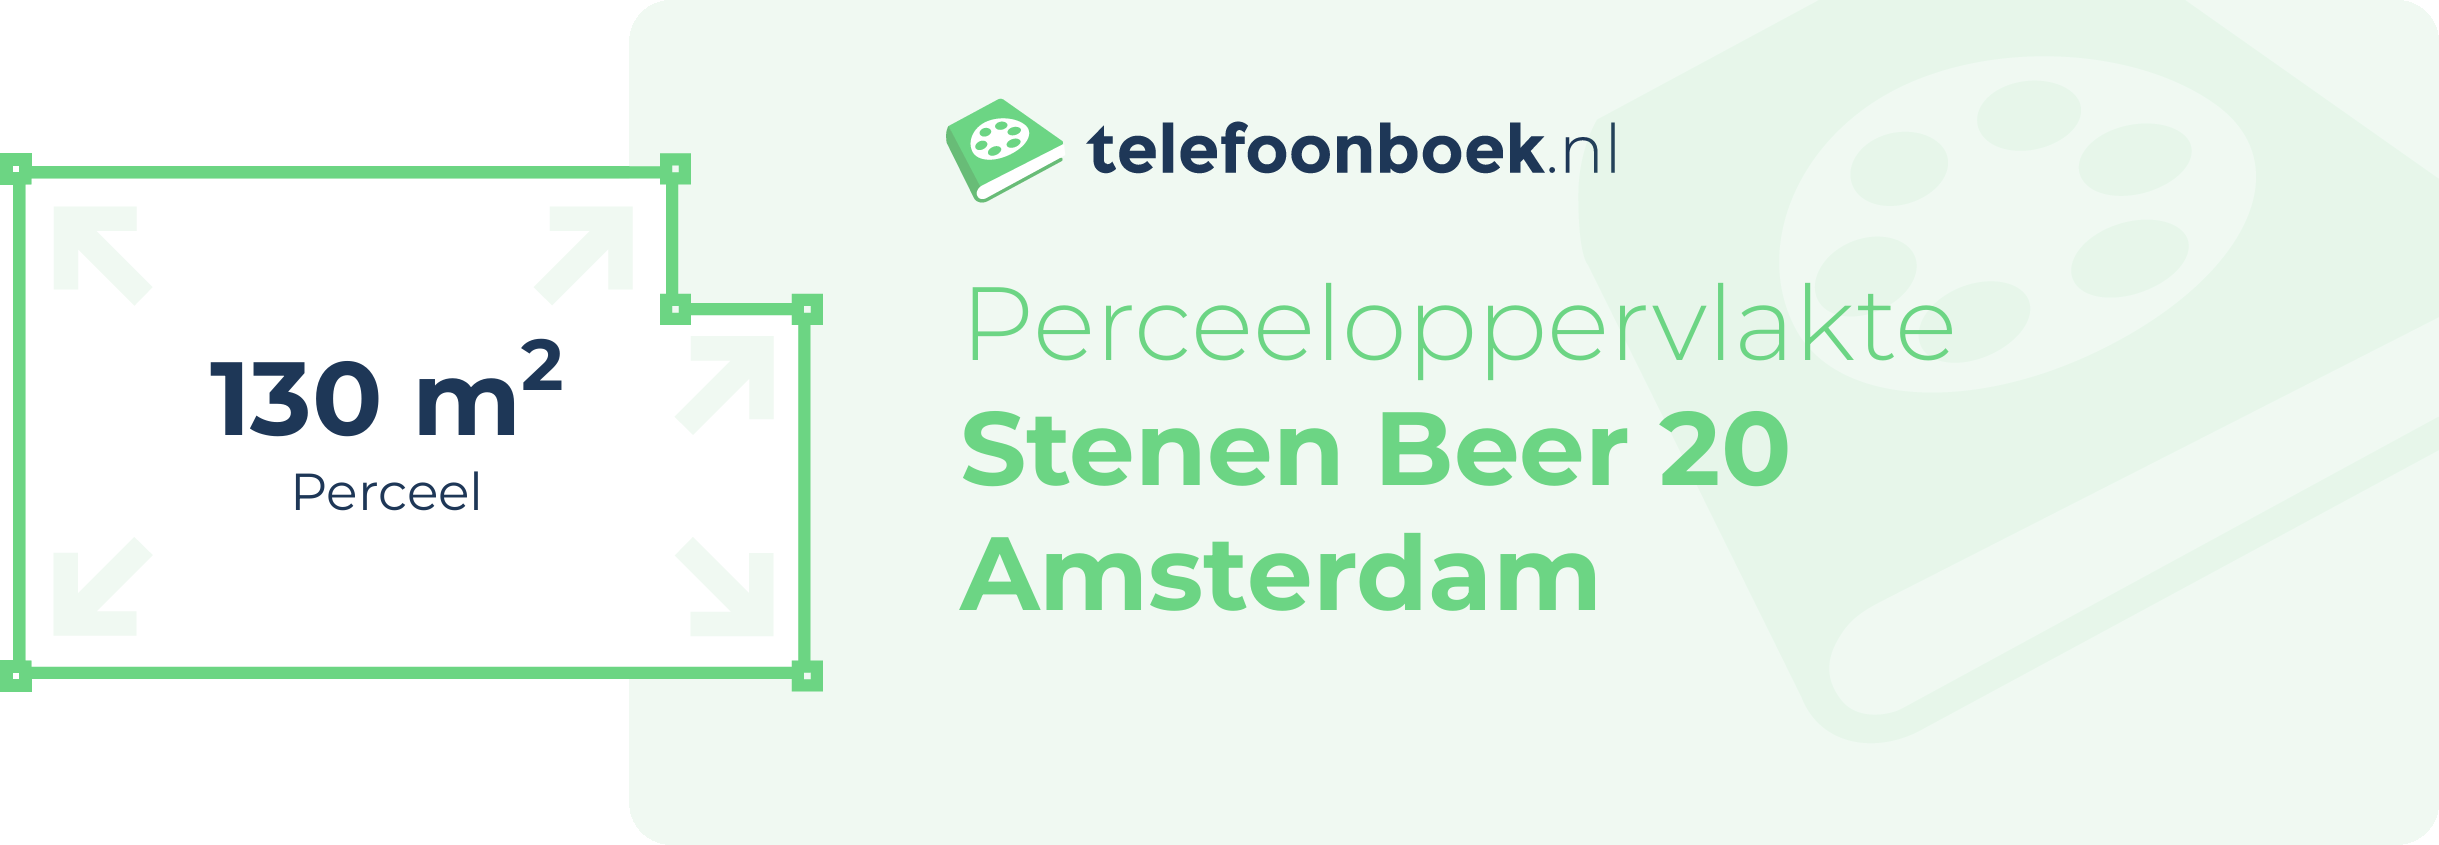 Perceeloppervlakte Stenen Beer 20 Amsterdam